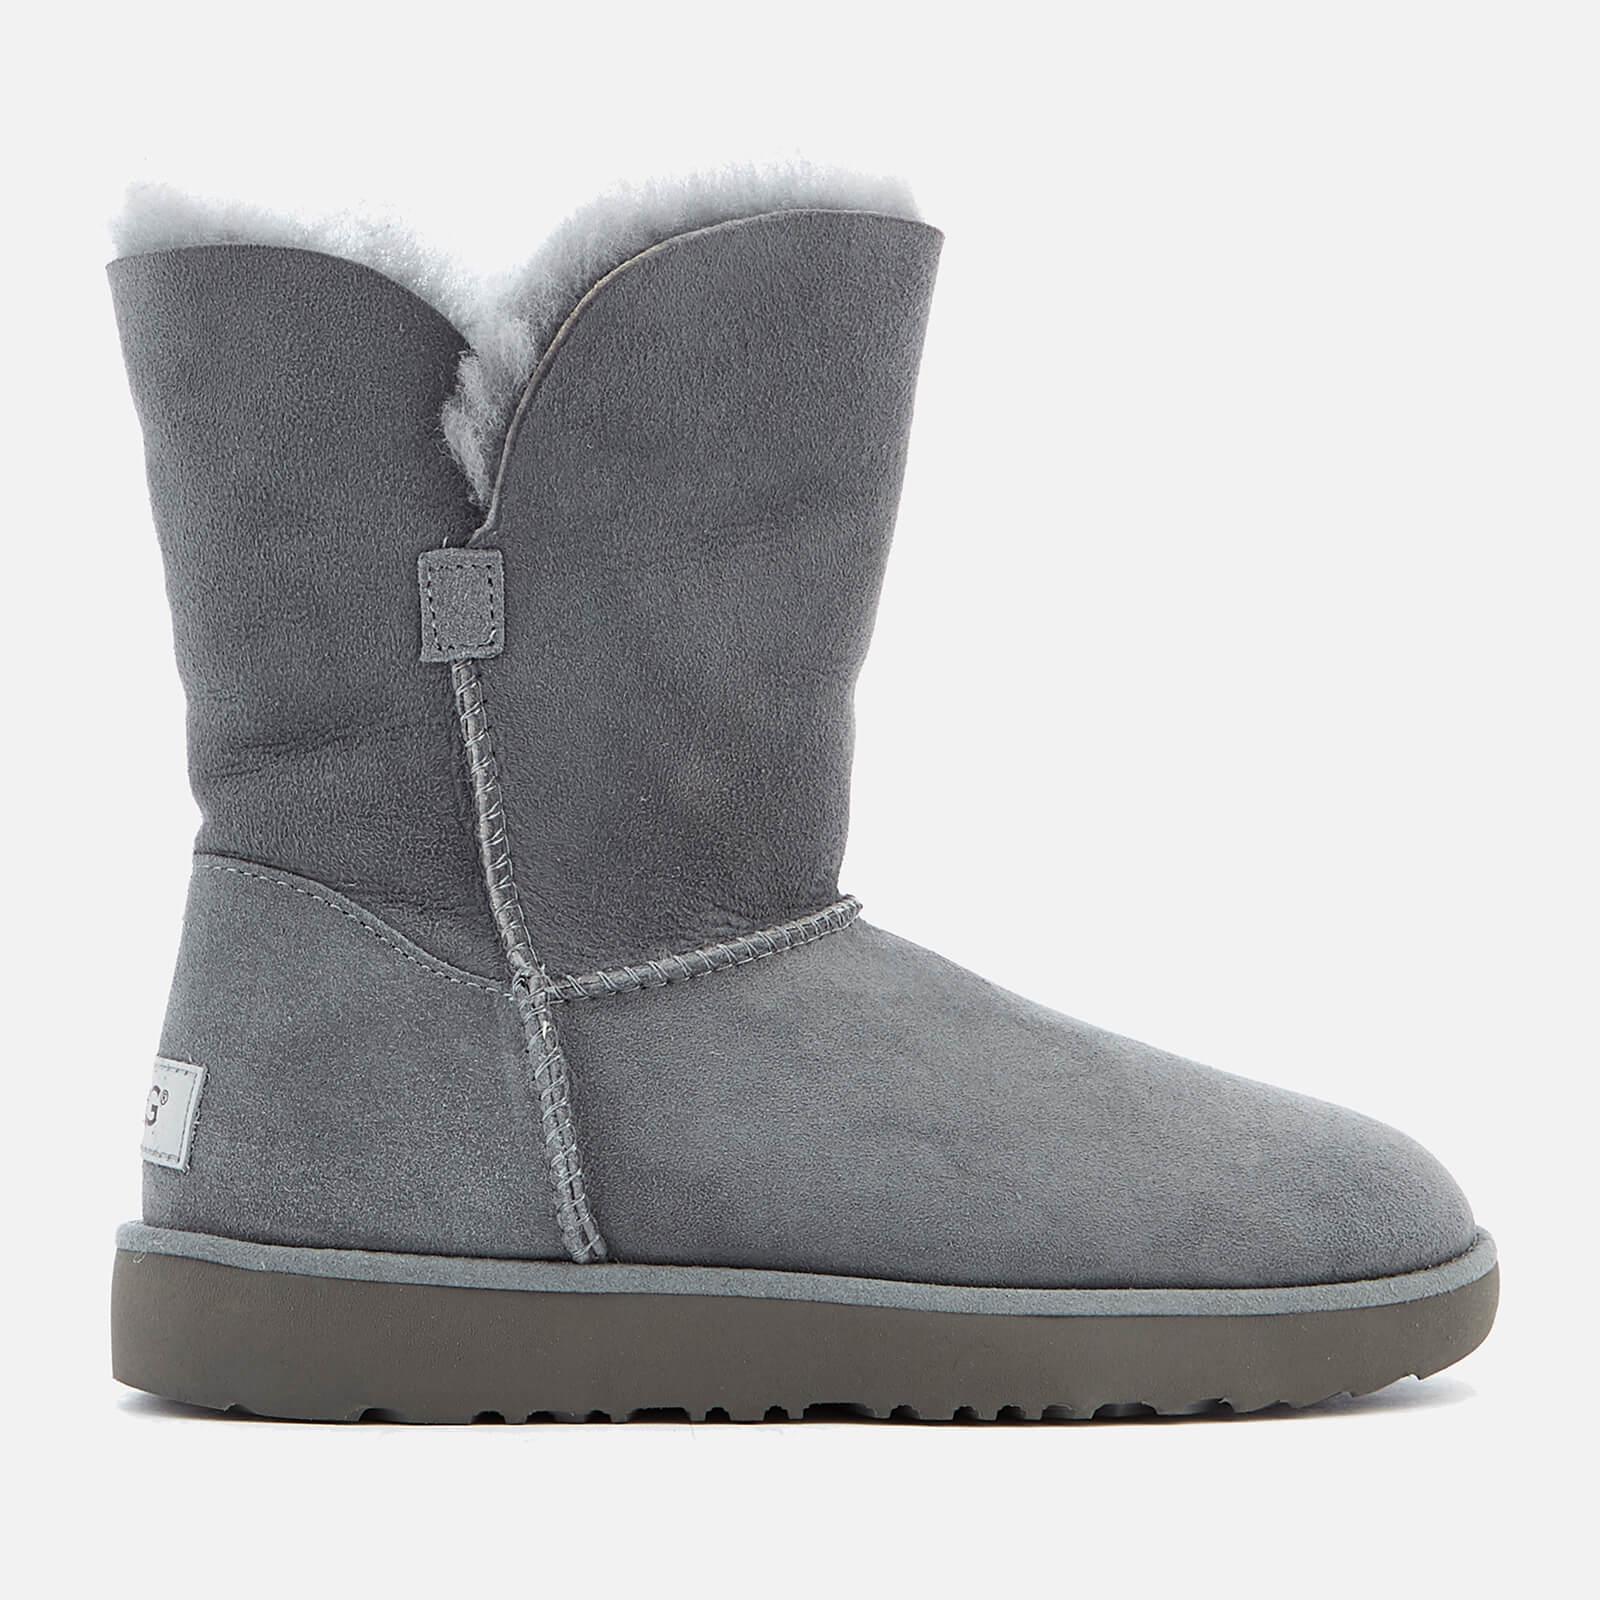 Lyst - Ugg Classic Cuff Short Sheepskin Boots in Gray